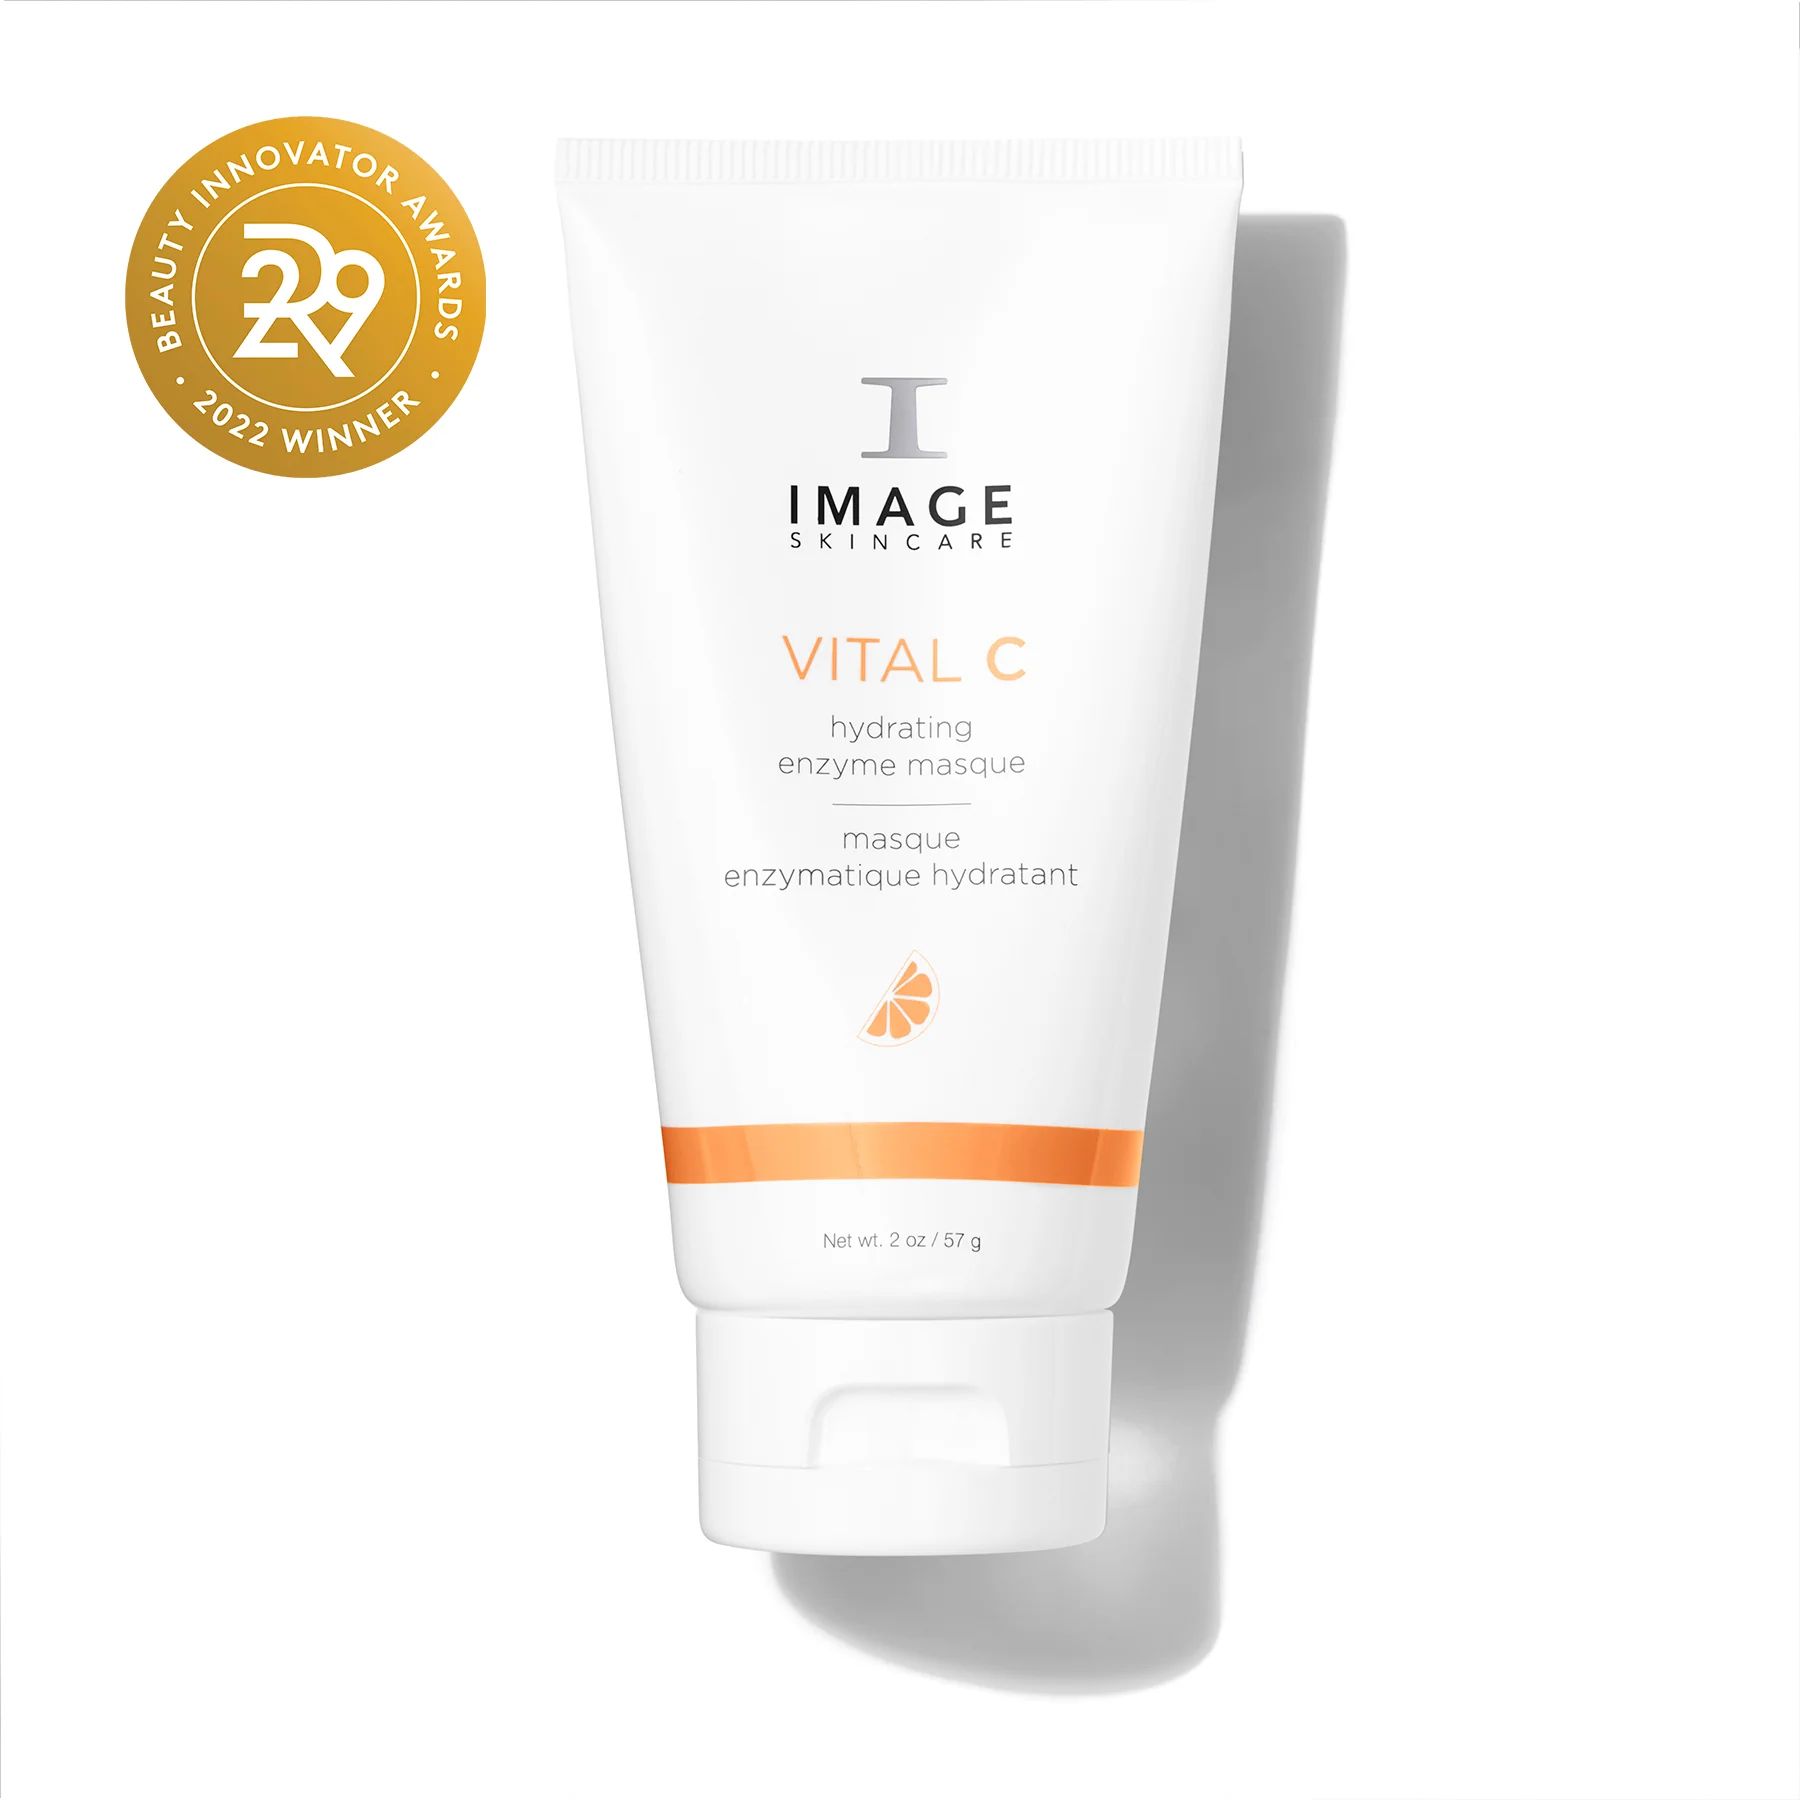 VITAL C hydrating enzyme masque | Image Skincare